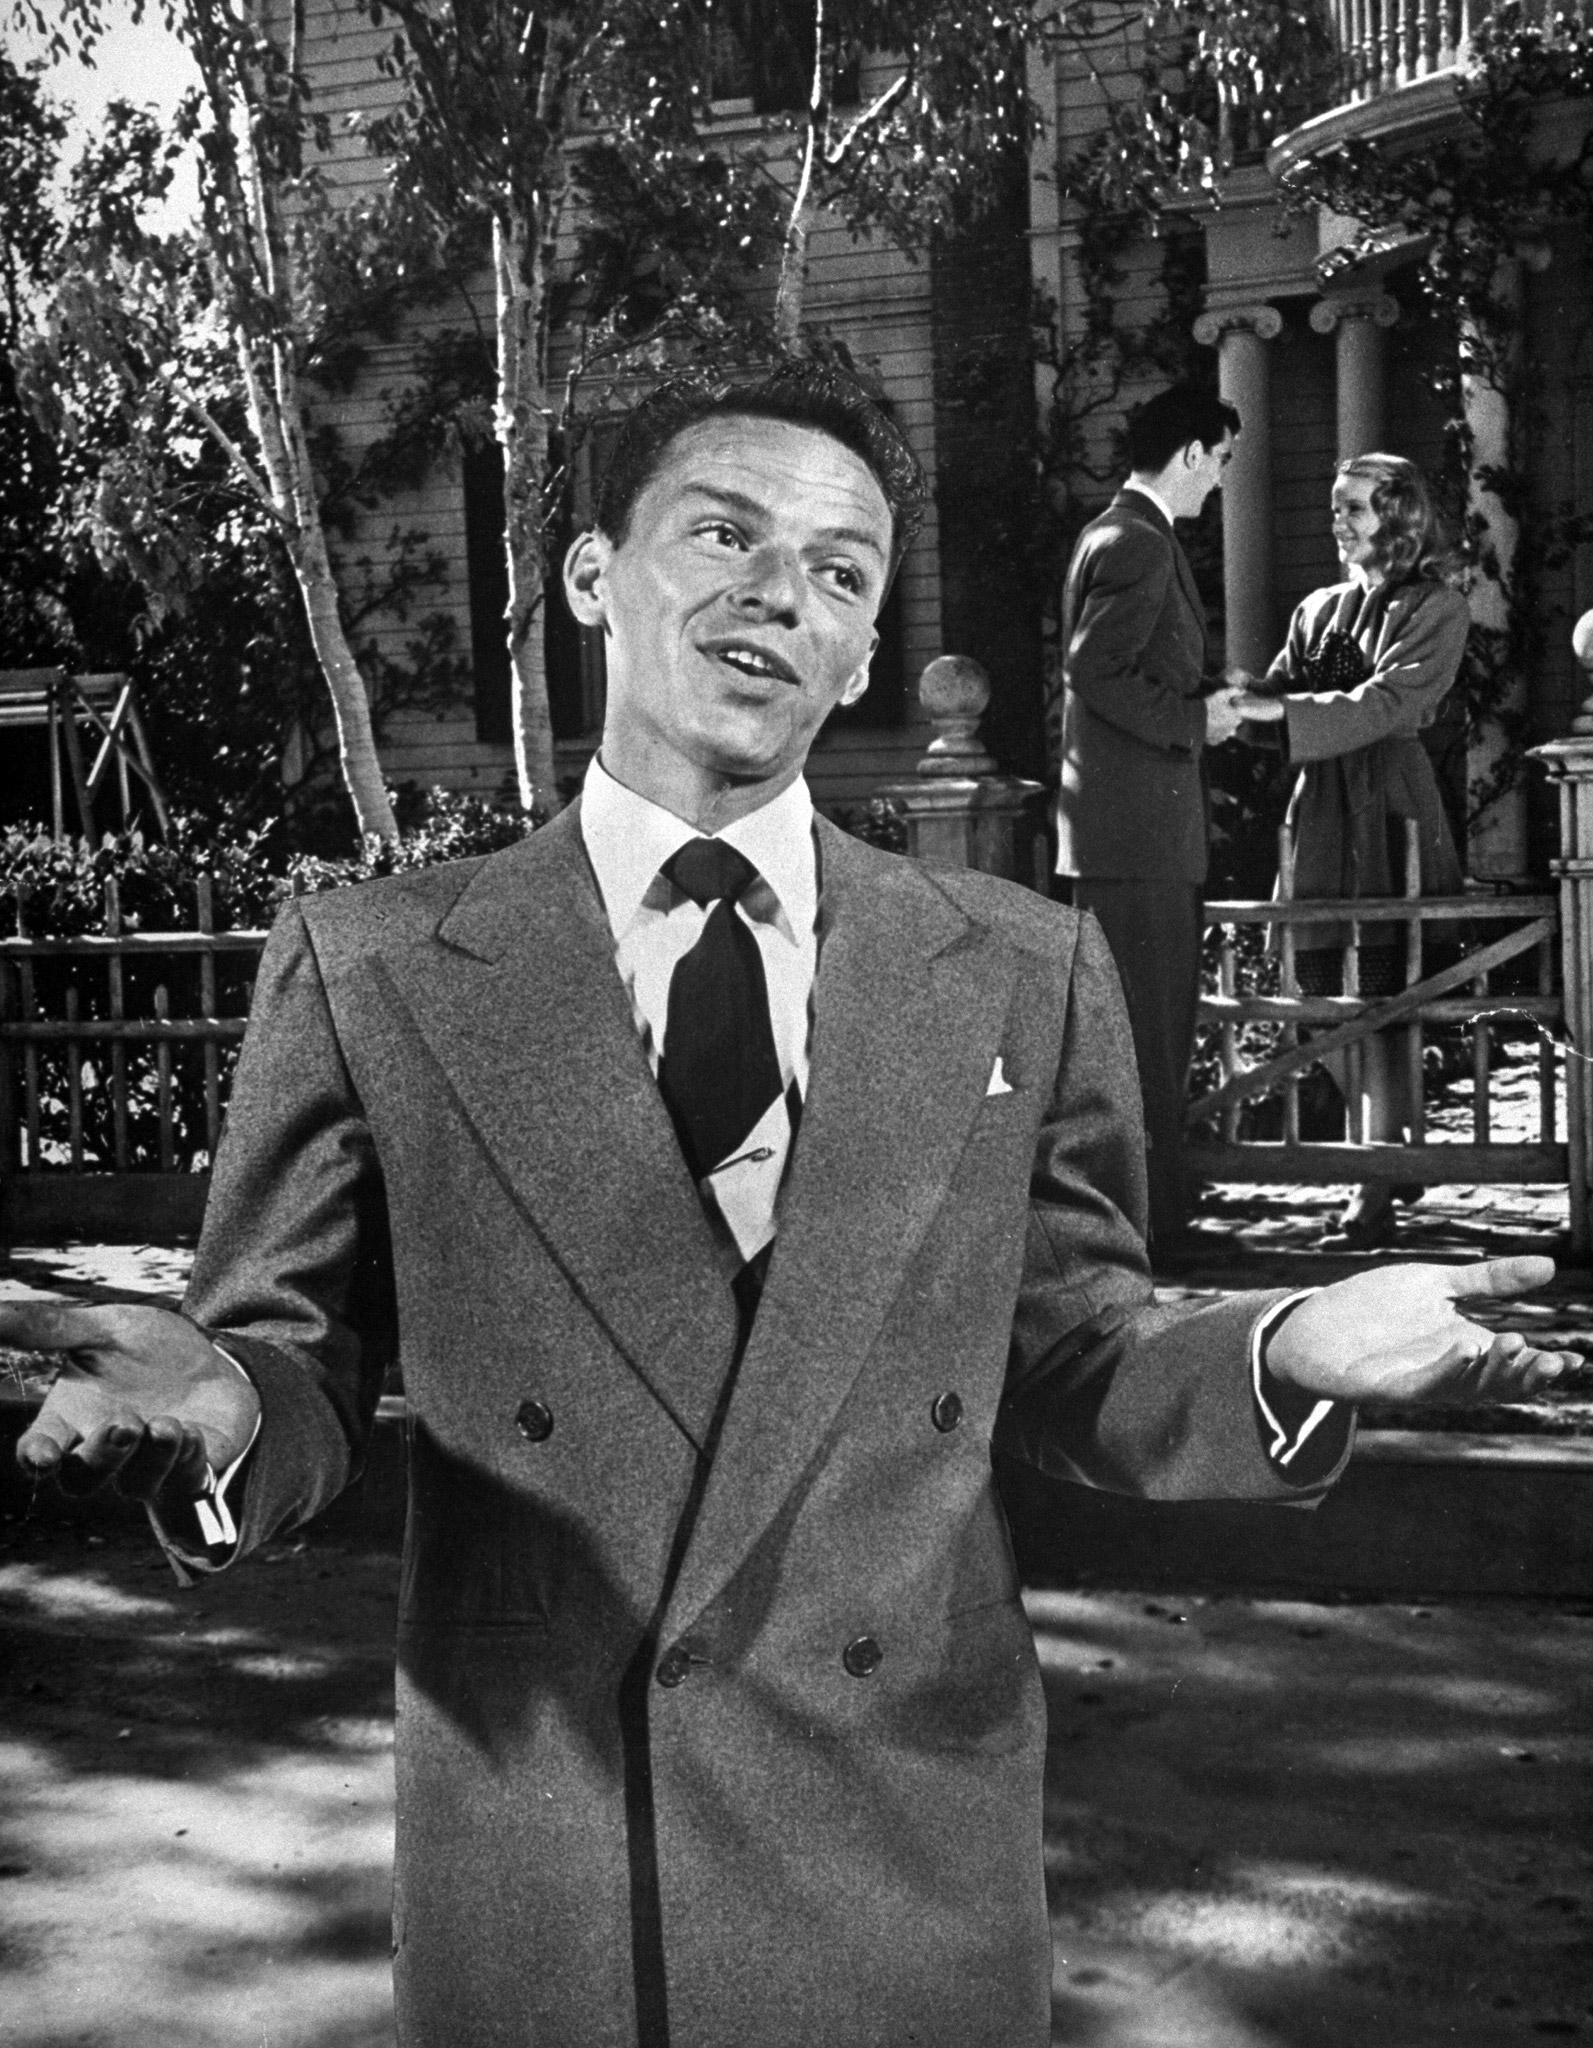 Frank Sinatra singing "Five Minutes More," 1946.